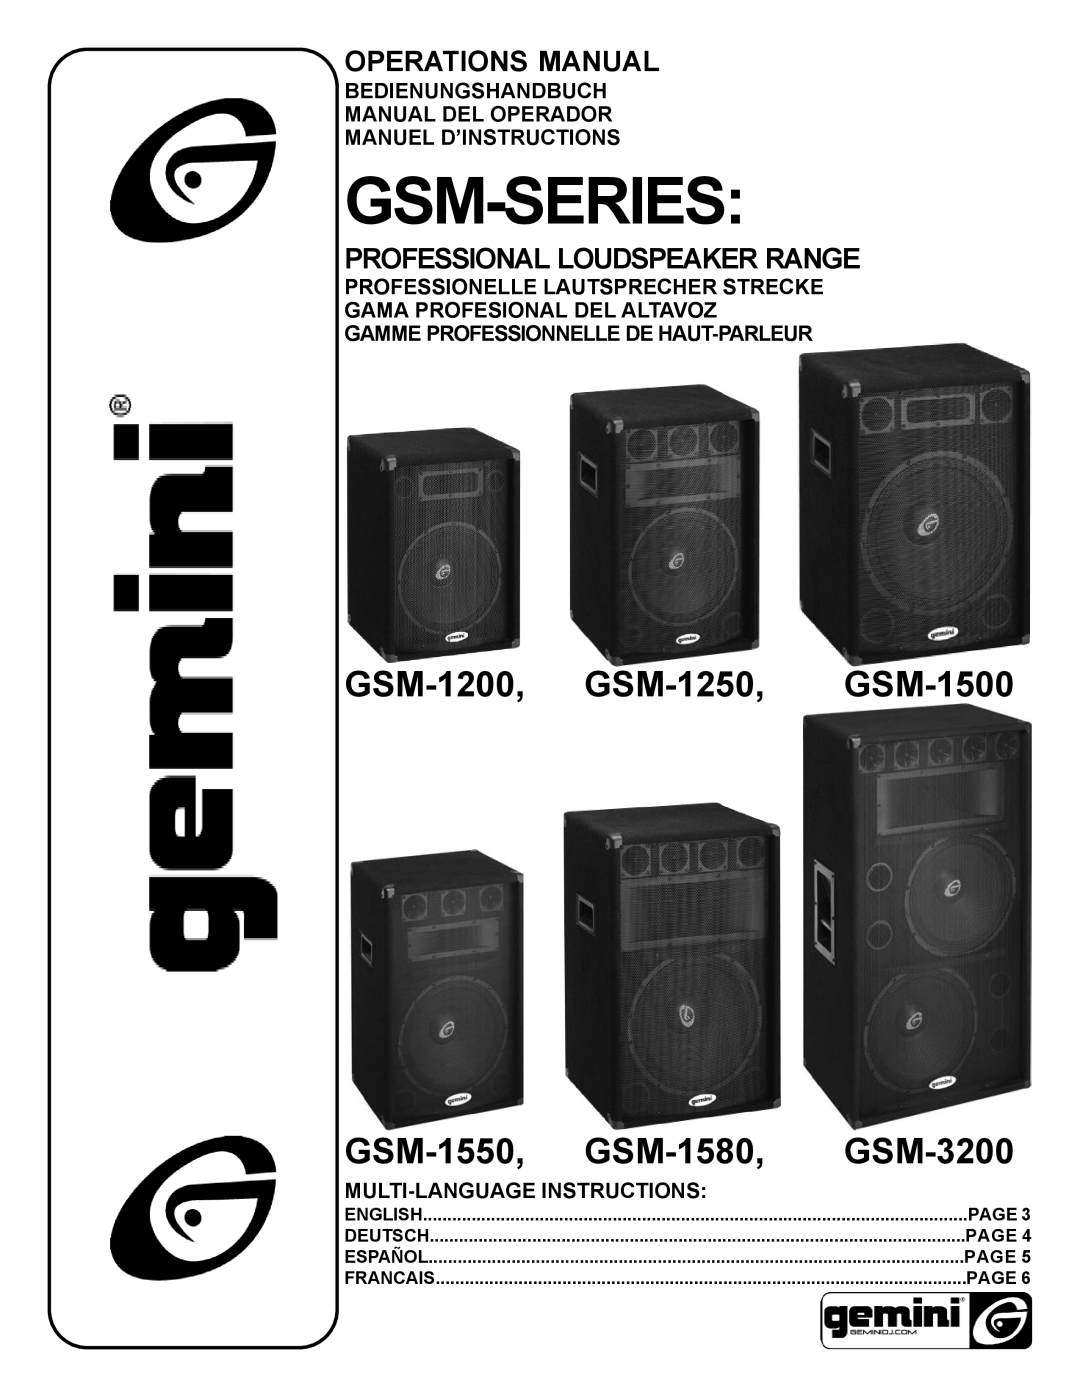 Gemini GSM-1580 manual Operations Manual, Professional Loudspeaker Range, Gamme Professionnelle De Haut-Parleur, Page 